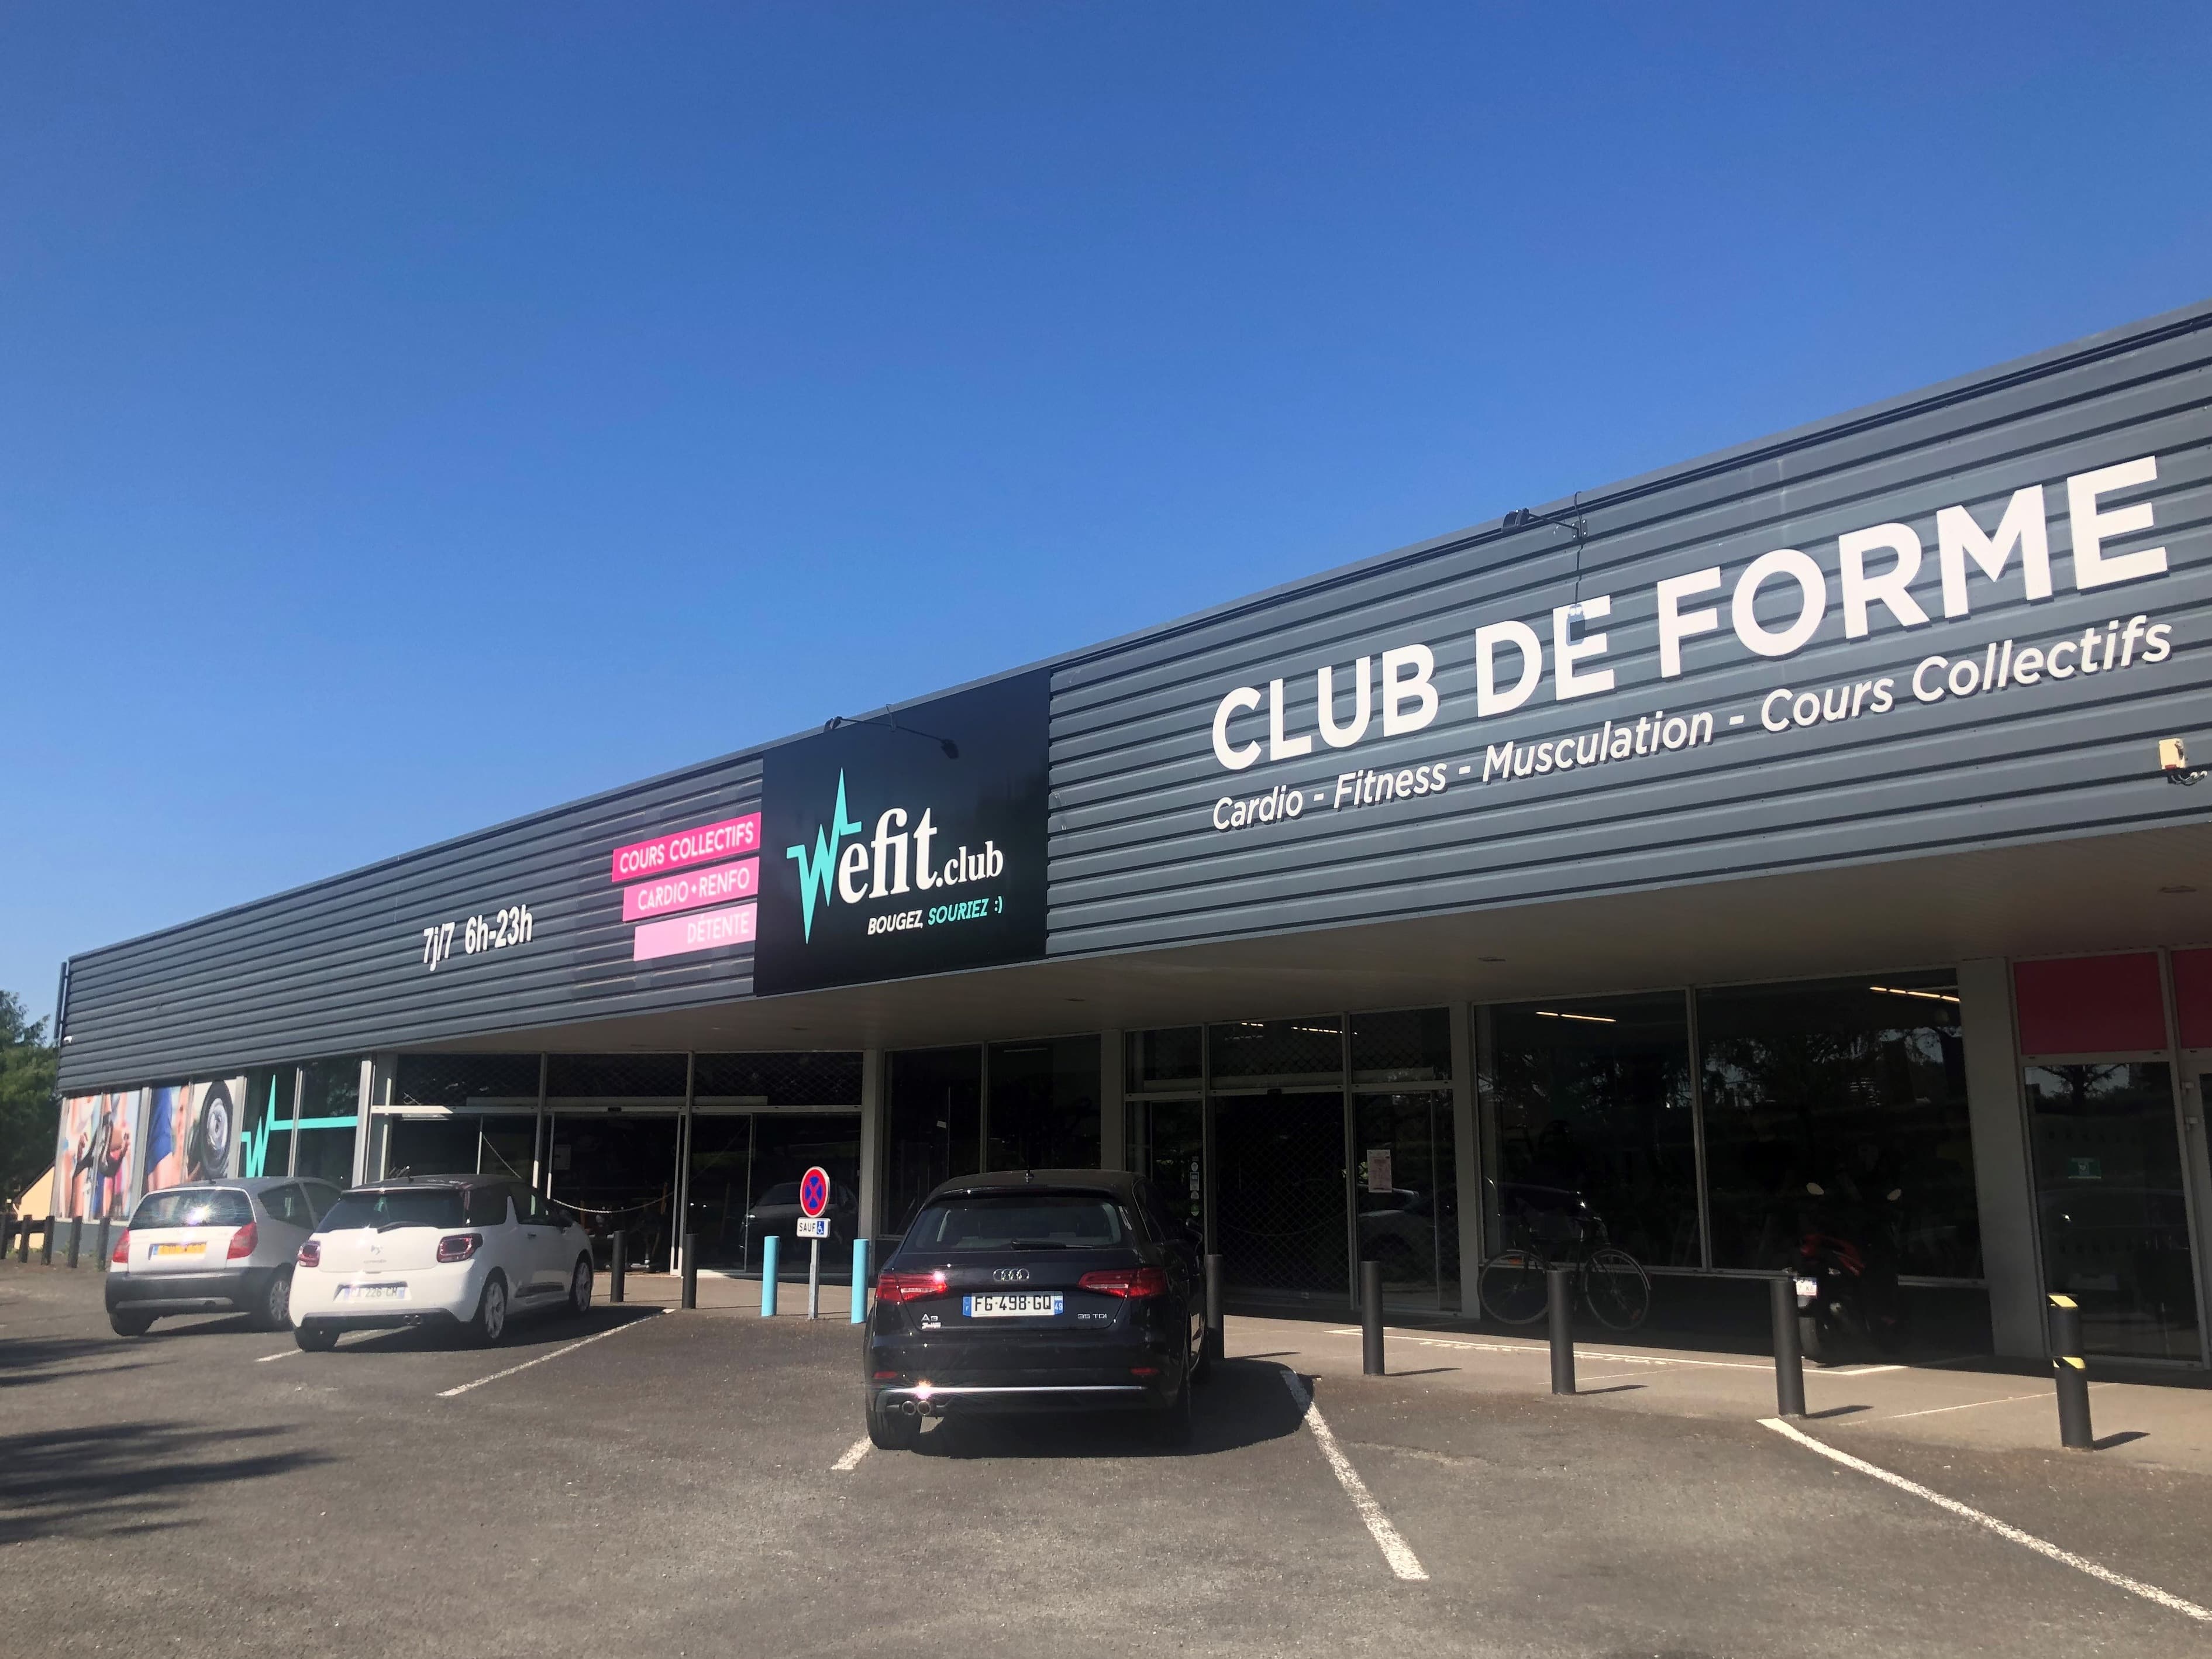 Wefit.club Laval